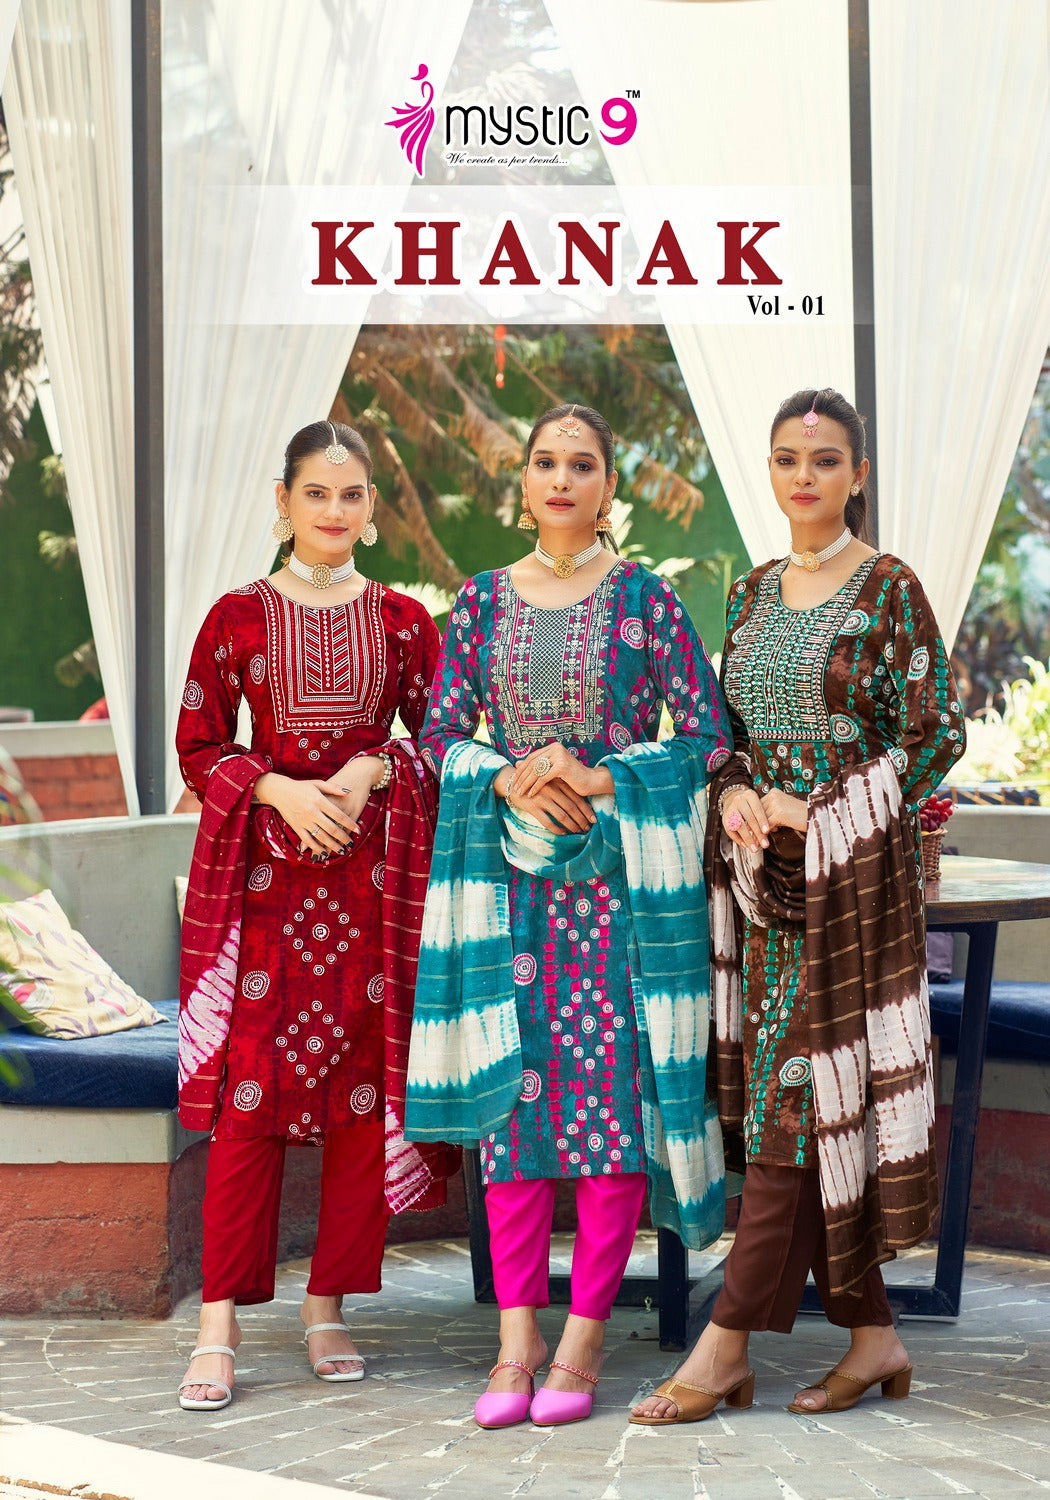 Khanak Vol 1 Mystic 9 Rayon Readymade Pant Style Suits